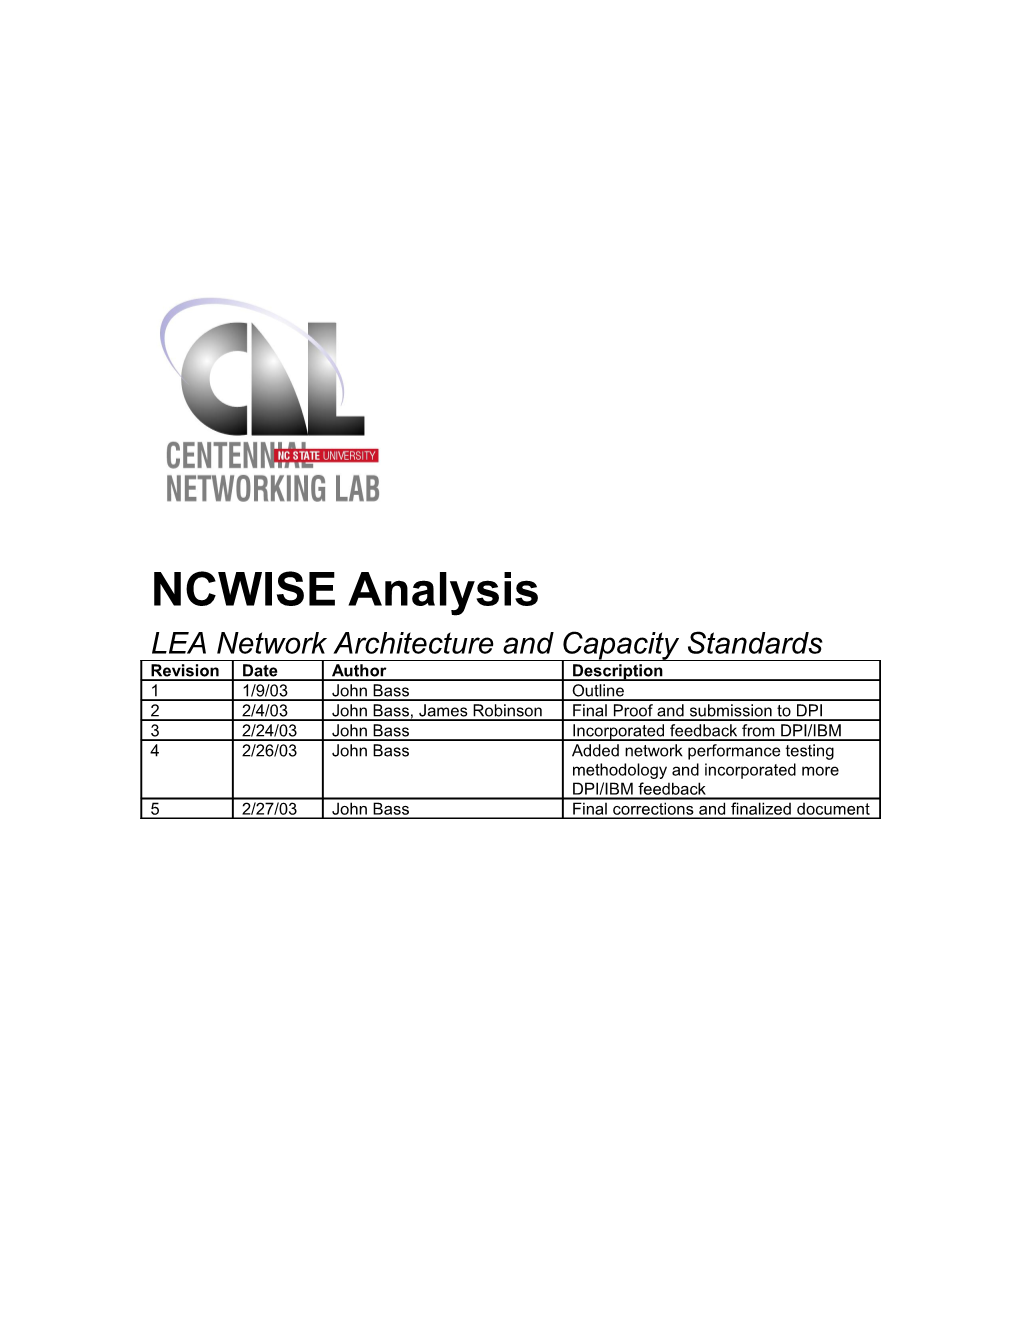 NCWISE System Analysis